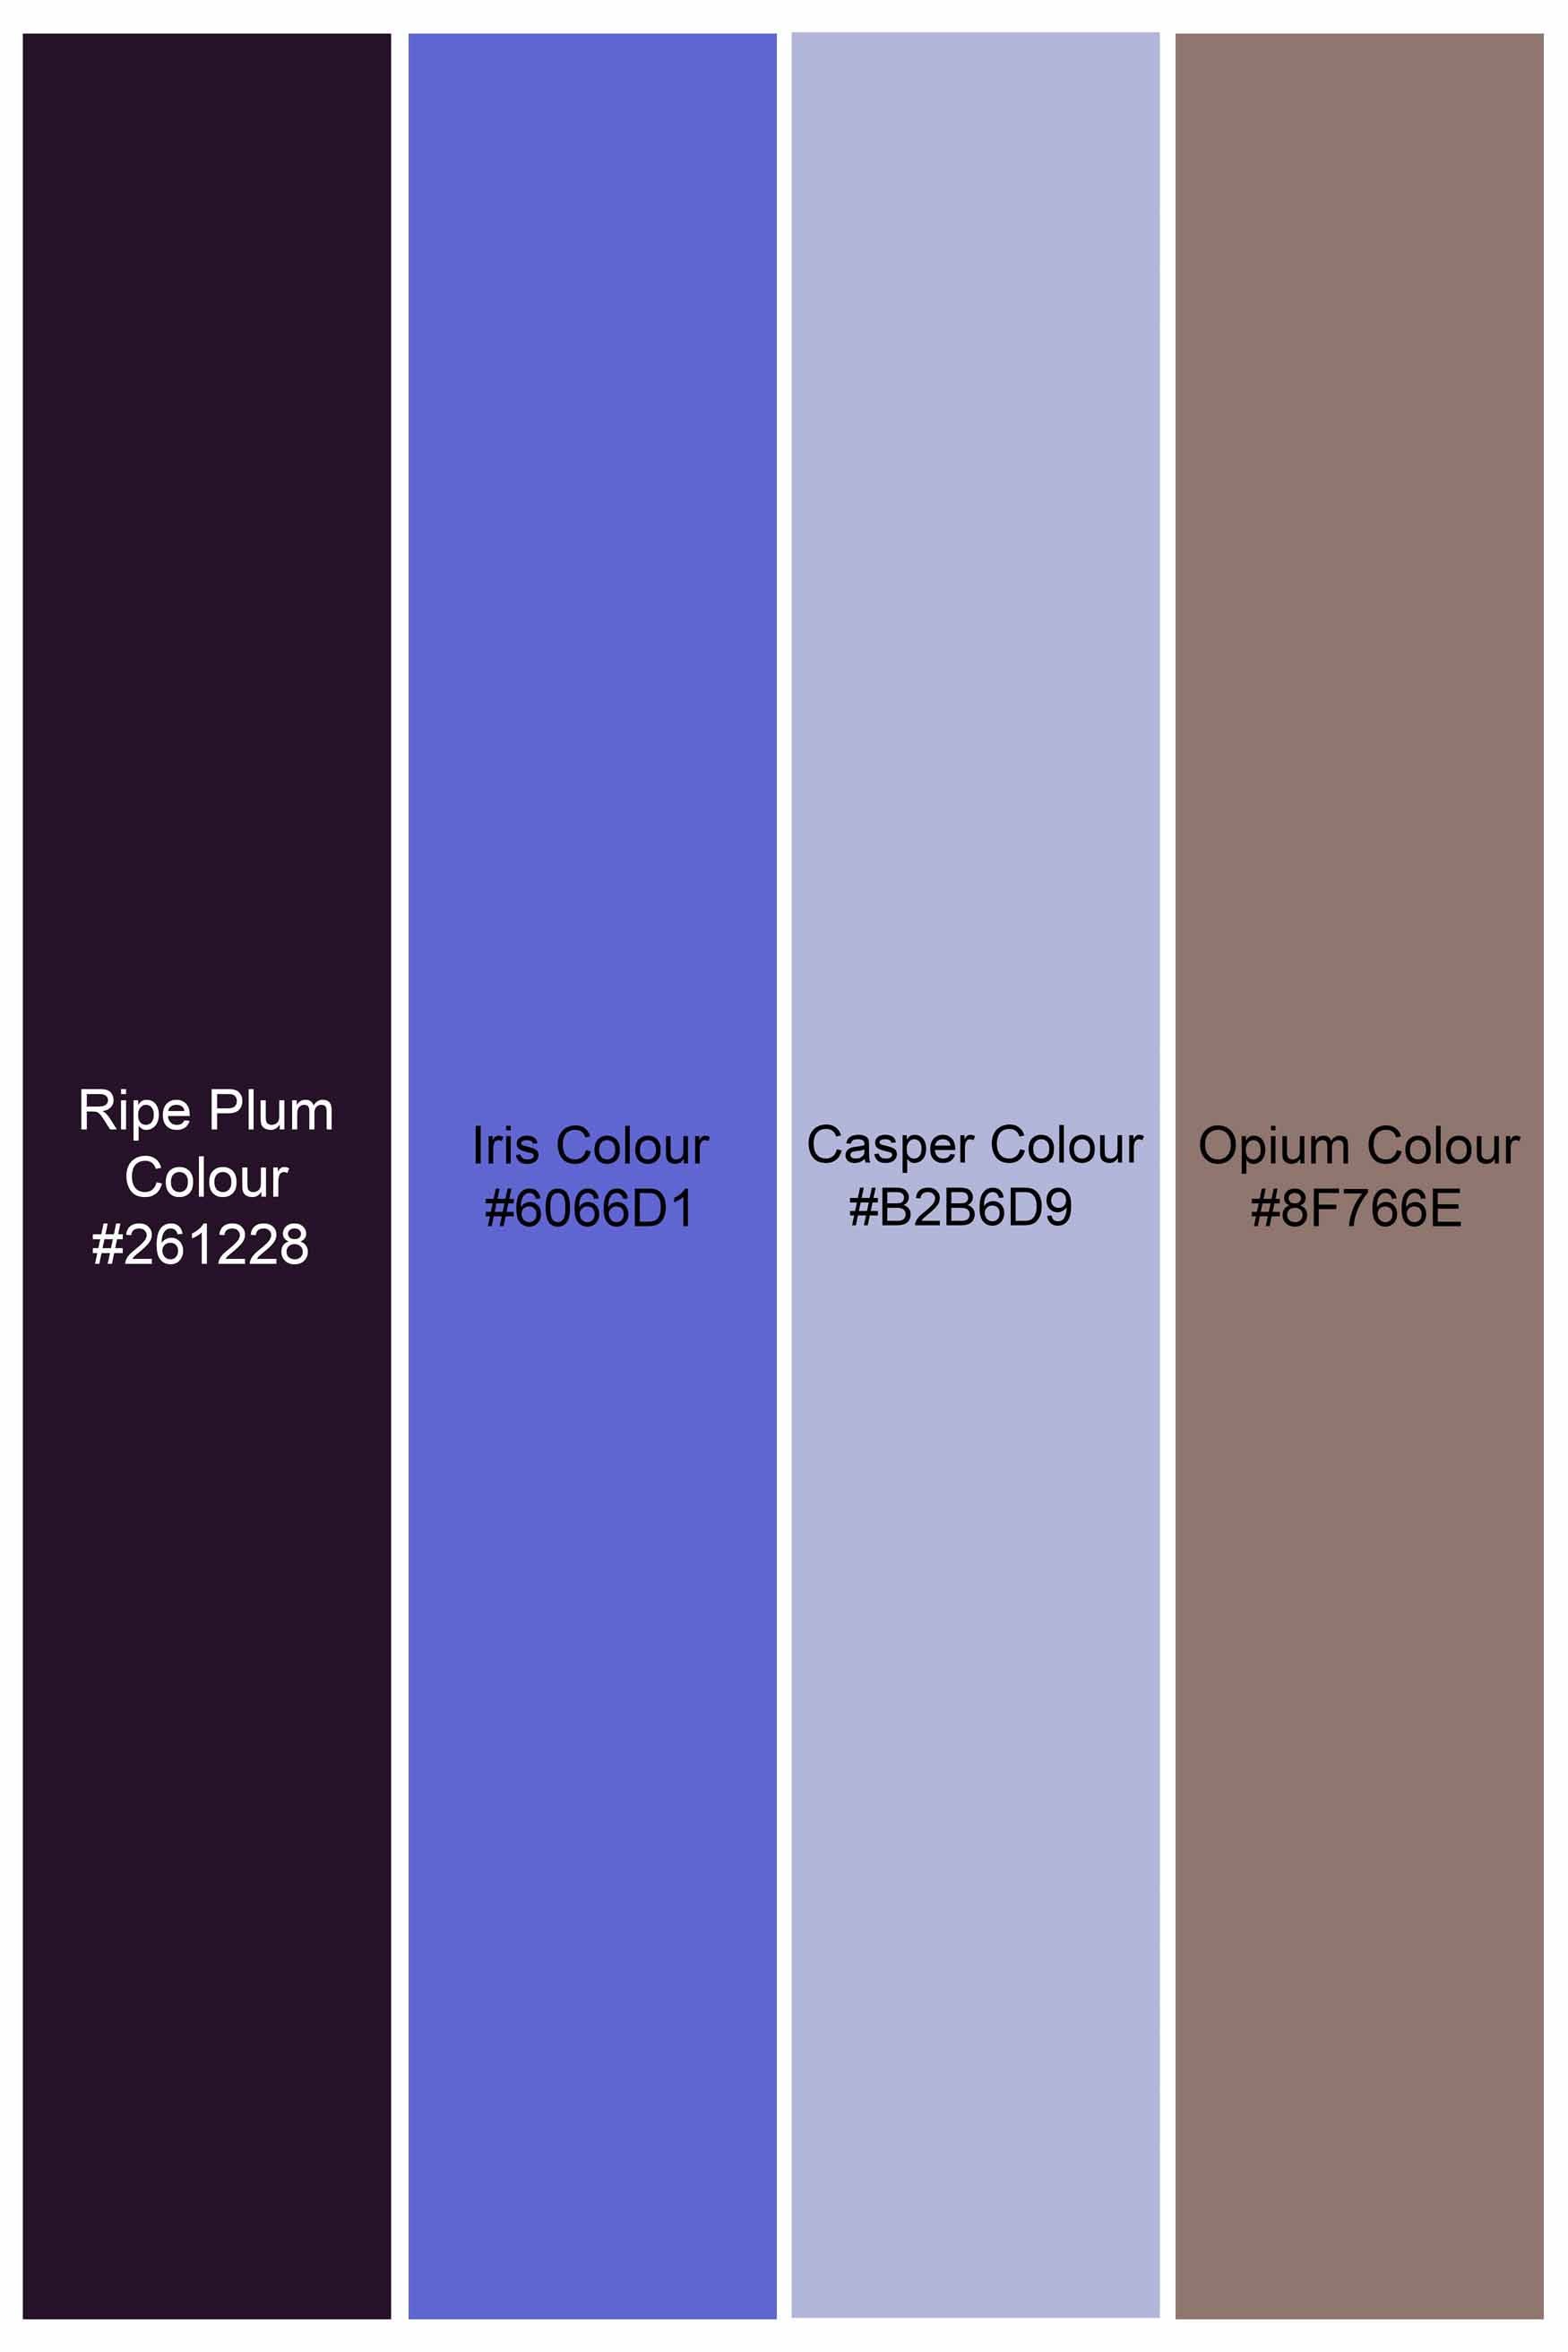 Ripe Plum Purple Multicolour Paisley Printed Subtle Sheen Super Soft Premium Cotton Designer Shirt 11478-BLK-38, 11478-BLK-H-38, 11478-BLK-39, 11478-BLK-H-39, 11478-BLK-40, 11478-BLK-H-40, 11478-BLK-42, 11478-BLK-H-42, 11478-BLK-44, 11478-BLK-H-44, 11478-BLK-46, 11478-BLK-H-46, 11478-BLK-48, 11478-BLK-H-48, 11478-BLK-50, 11478-BLK-H-50, 11478-BLK-52, 11478-BLK-H-52